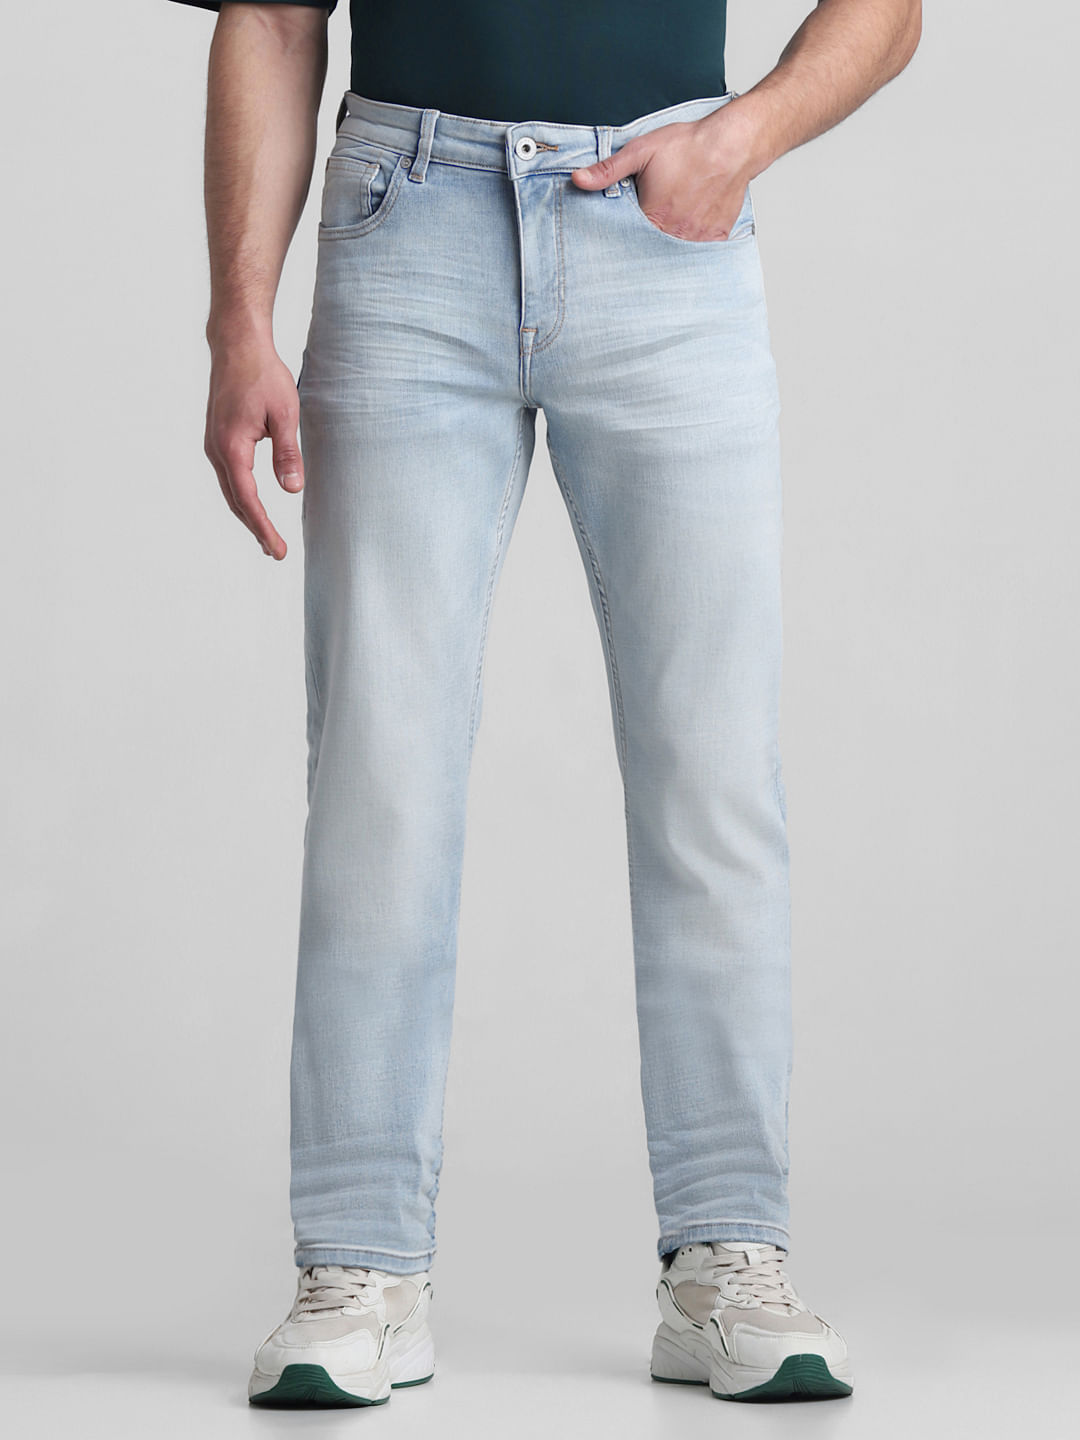 Kapital Indigo N8 Men's Brown and Blue Denim Jeans